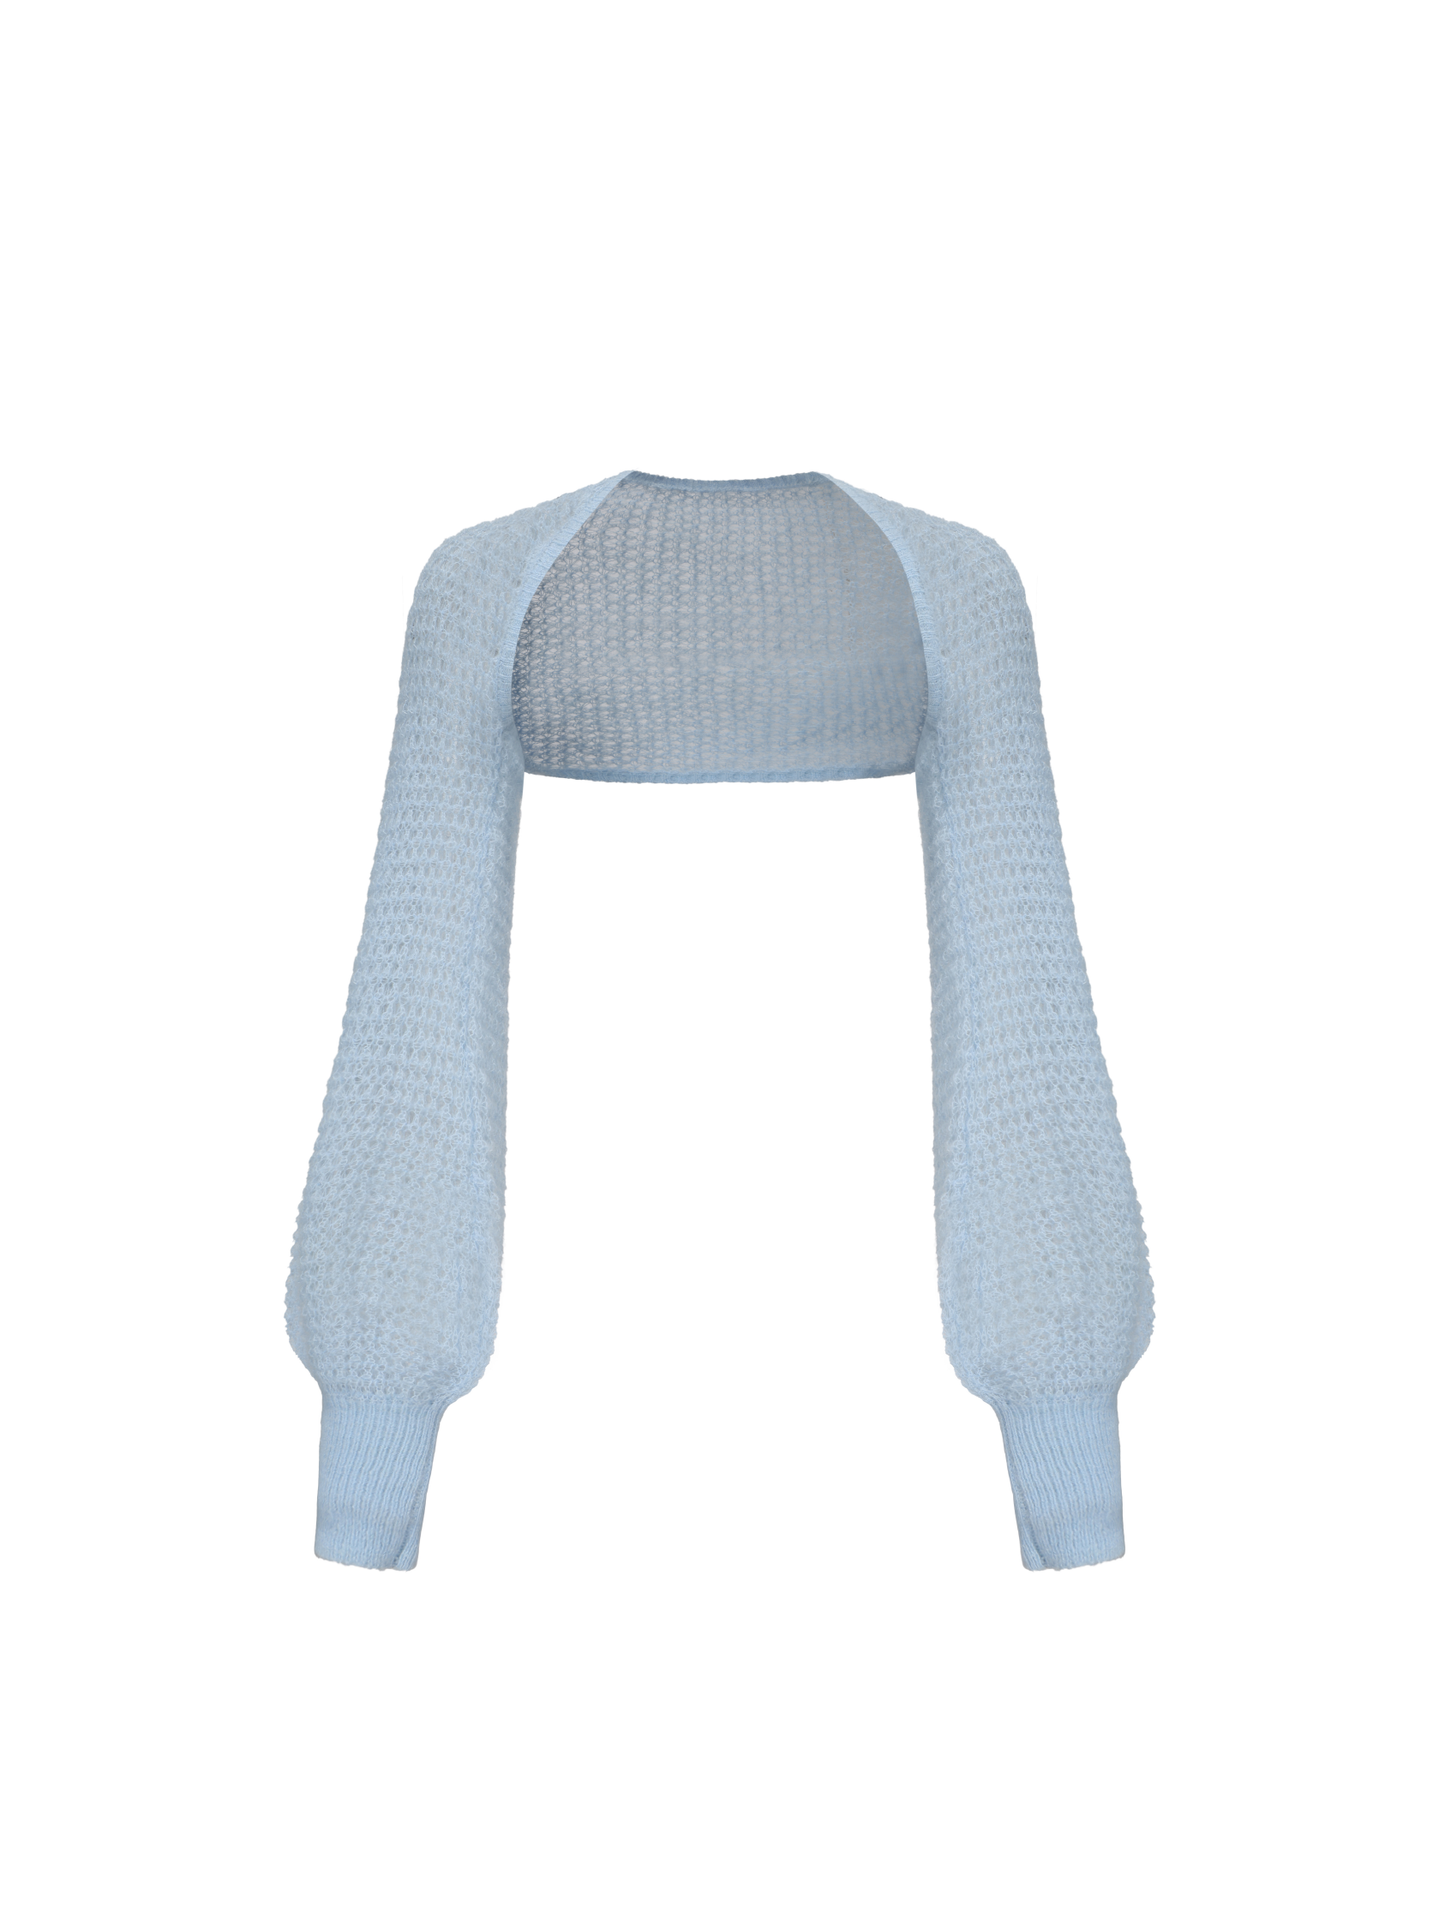 Sonya Knitted Cardigan (Blue)